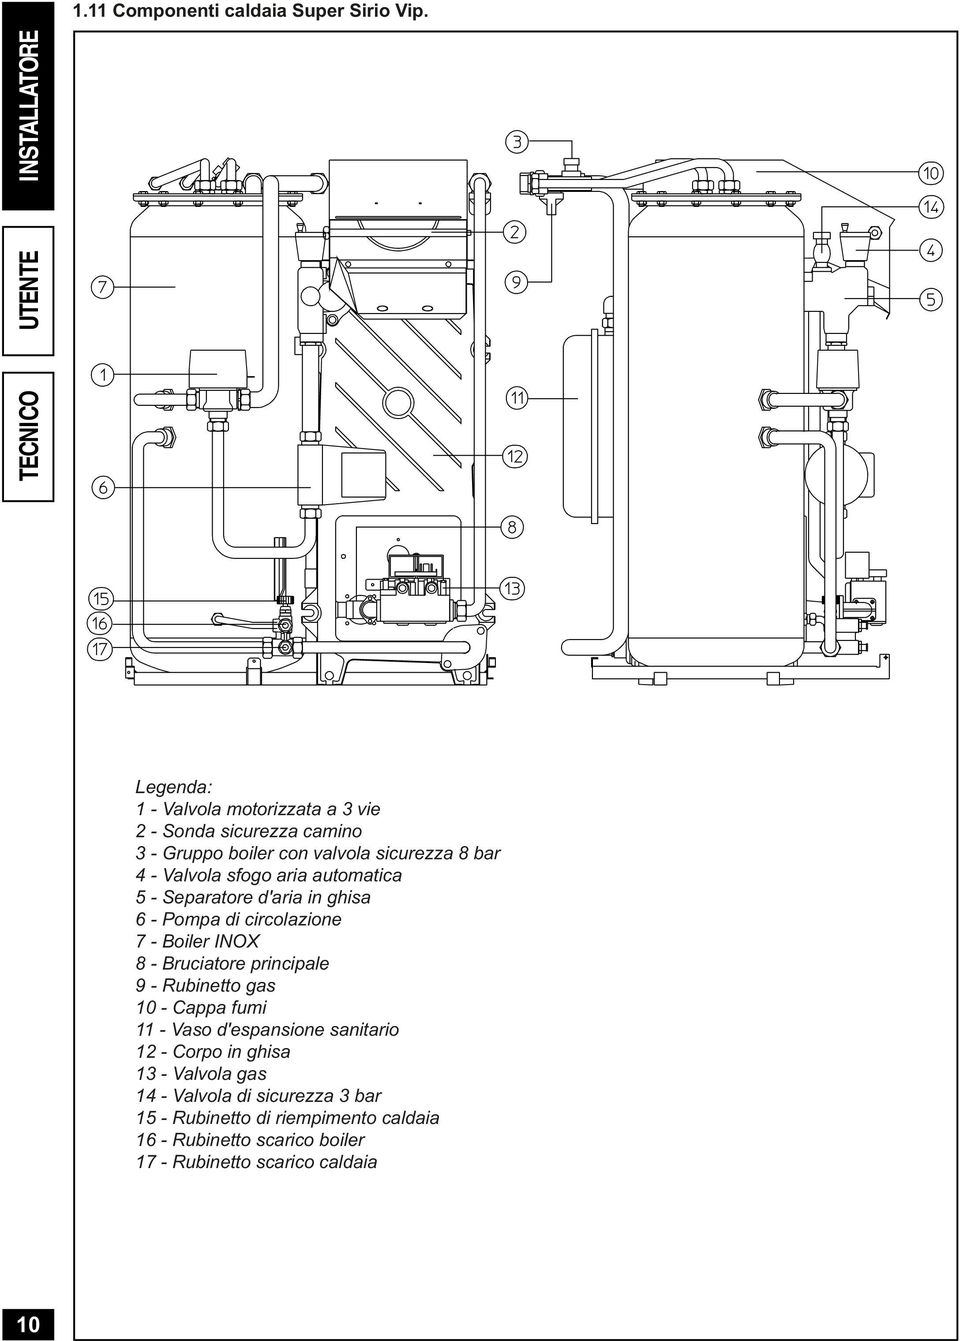 bar 4 - Valvola sfogo aria automatica 5 - Separatore d'aria in ghisa 6 - Pompa di circolazione 7 - Boiler INOX 8 - Bruciatore principale 9